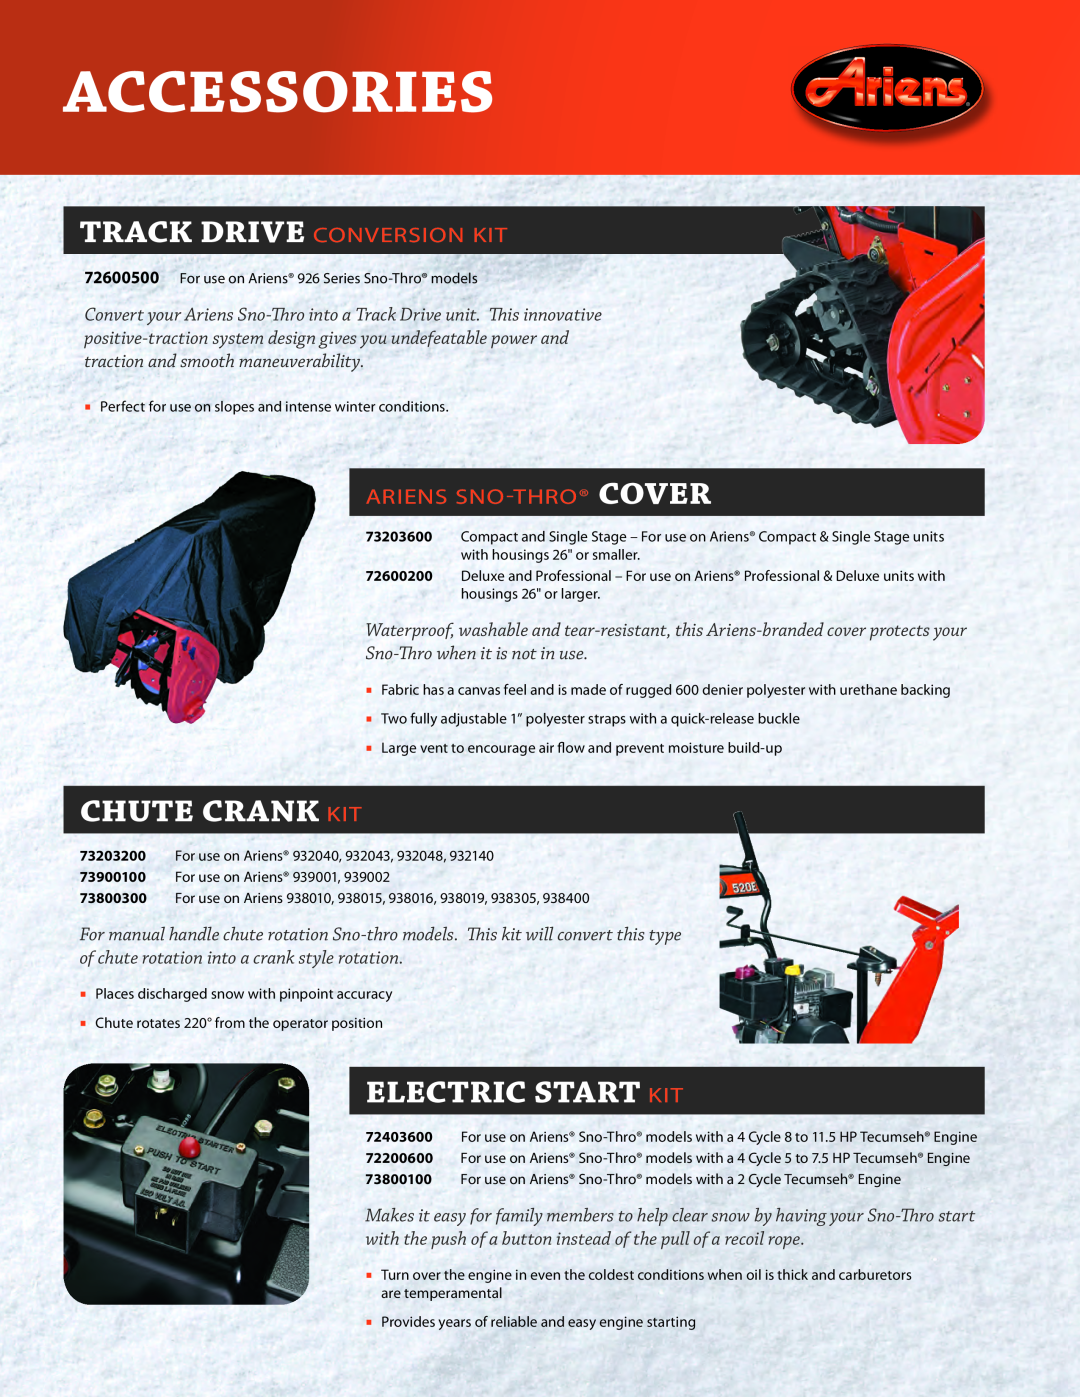 Ariens 72406500 manual Chute Crank Kit, Electric Start Kit, Track Drive Conversion Kit, Ariens Sno-Thro Cover, Accessories 